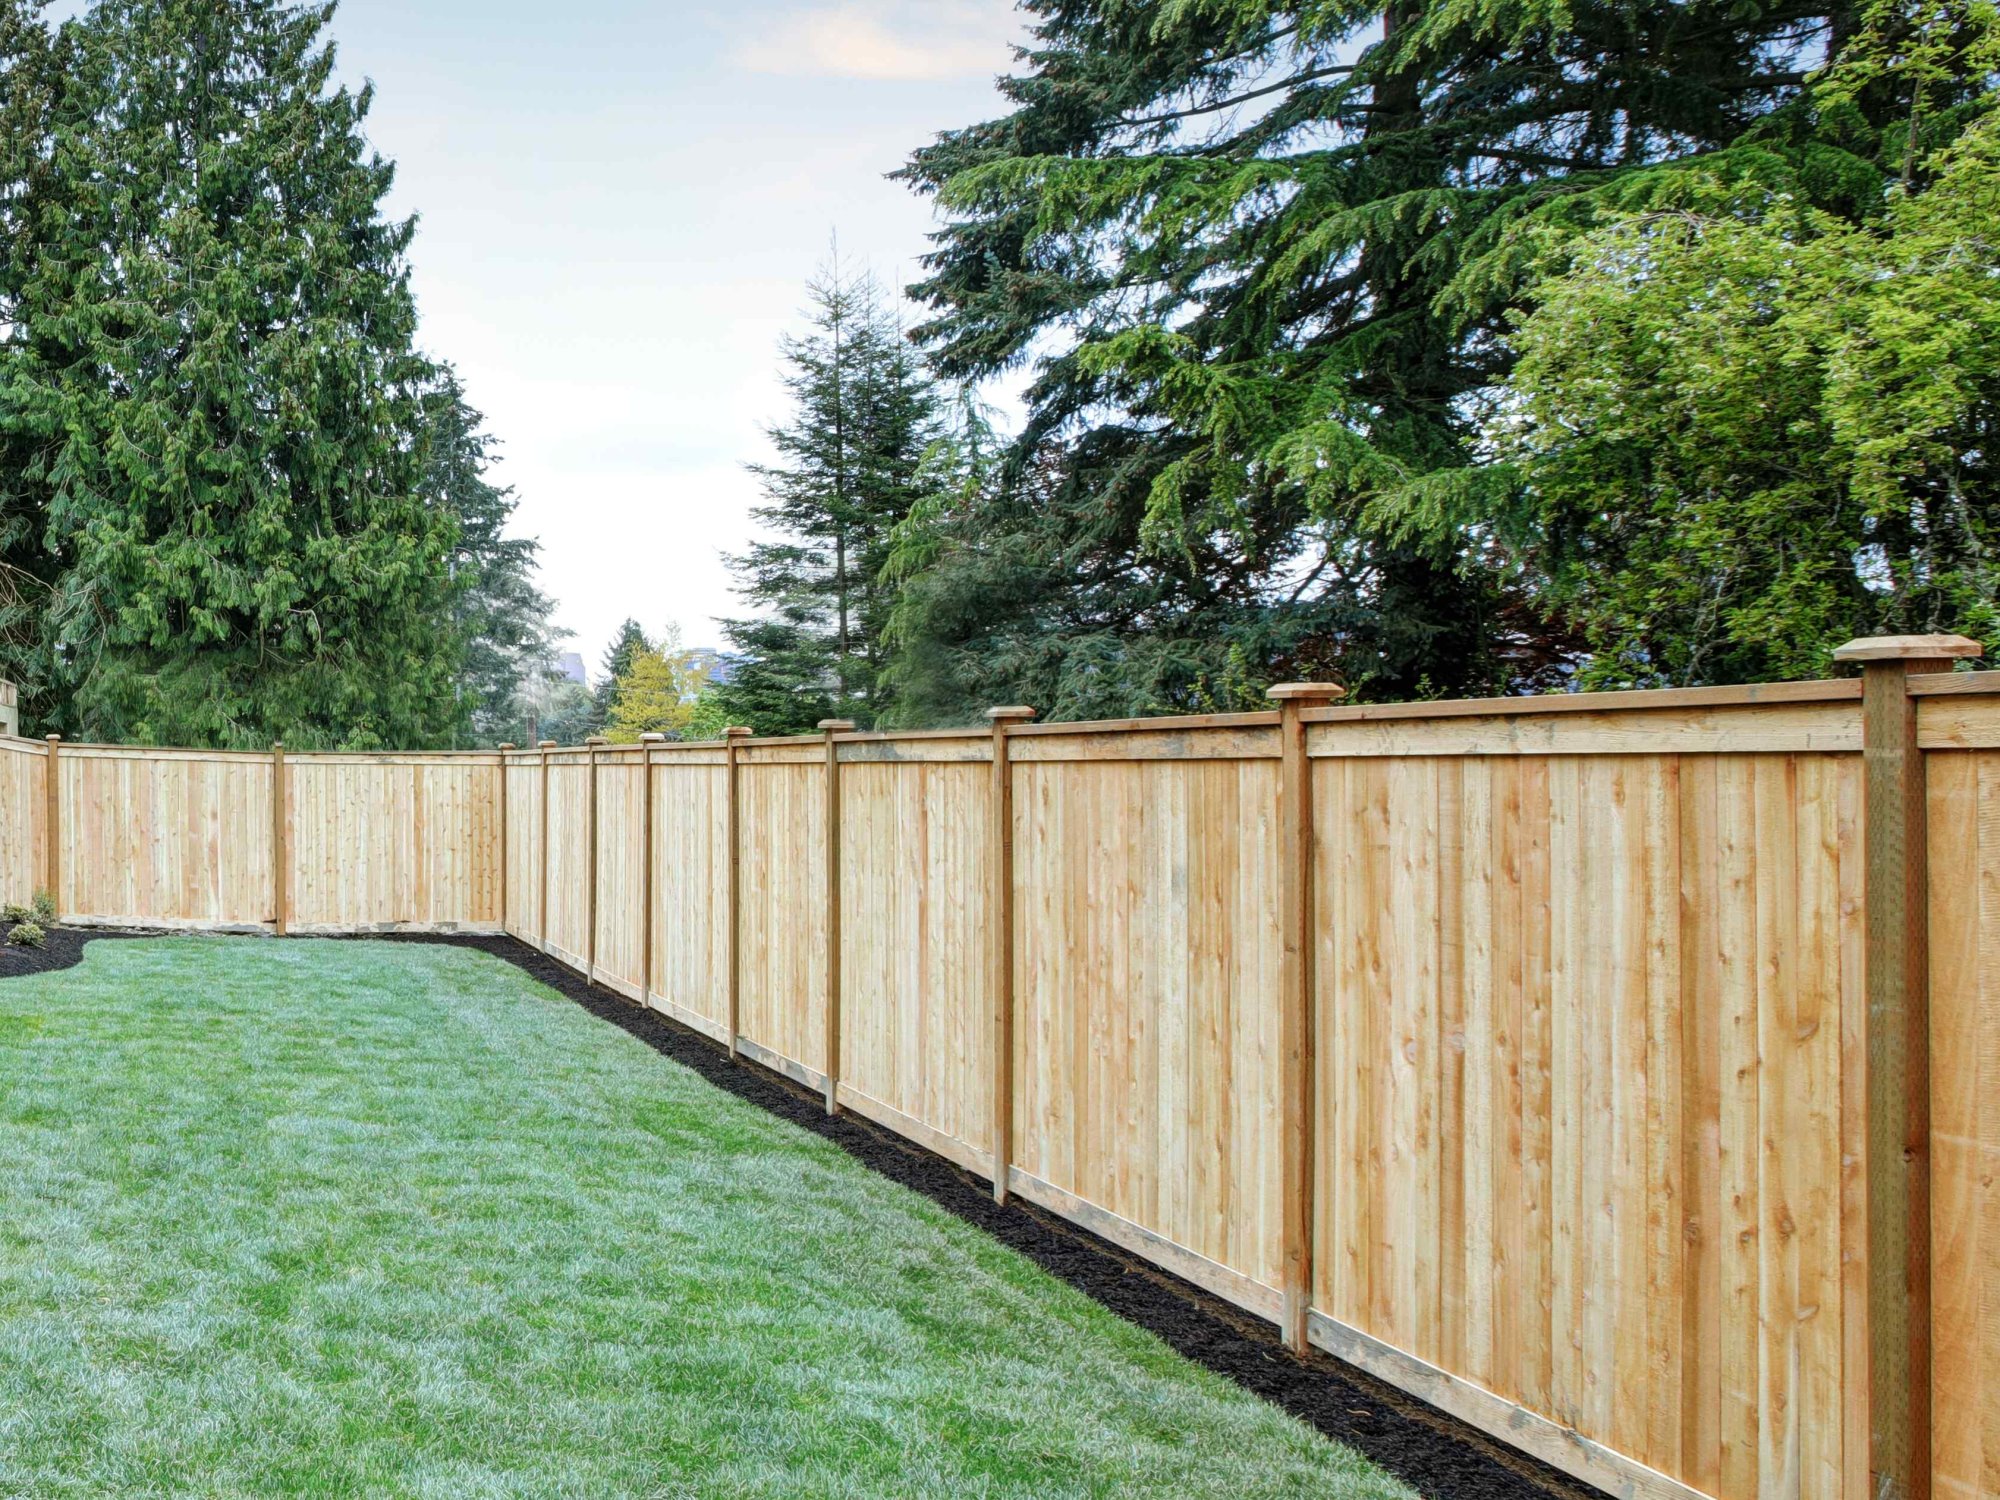 Schriever LA cap and trim style wood fence